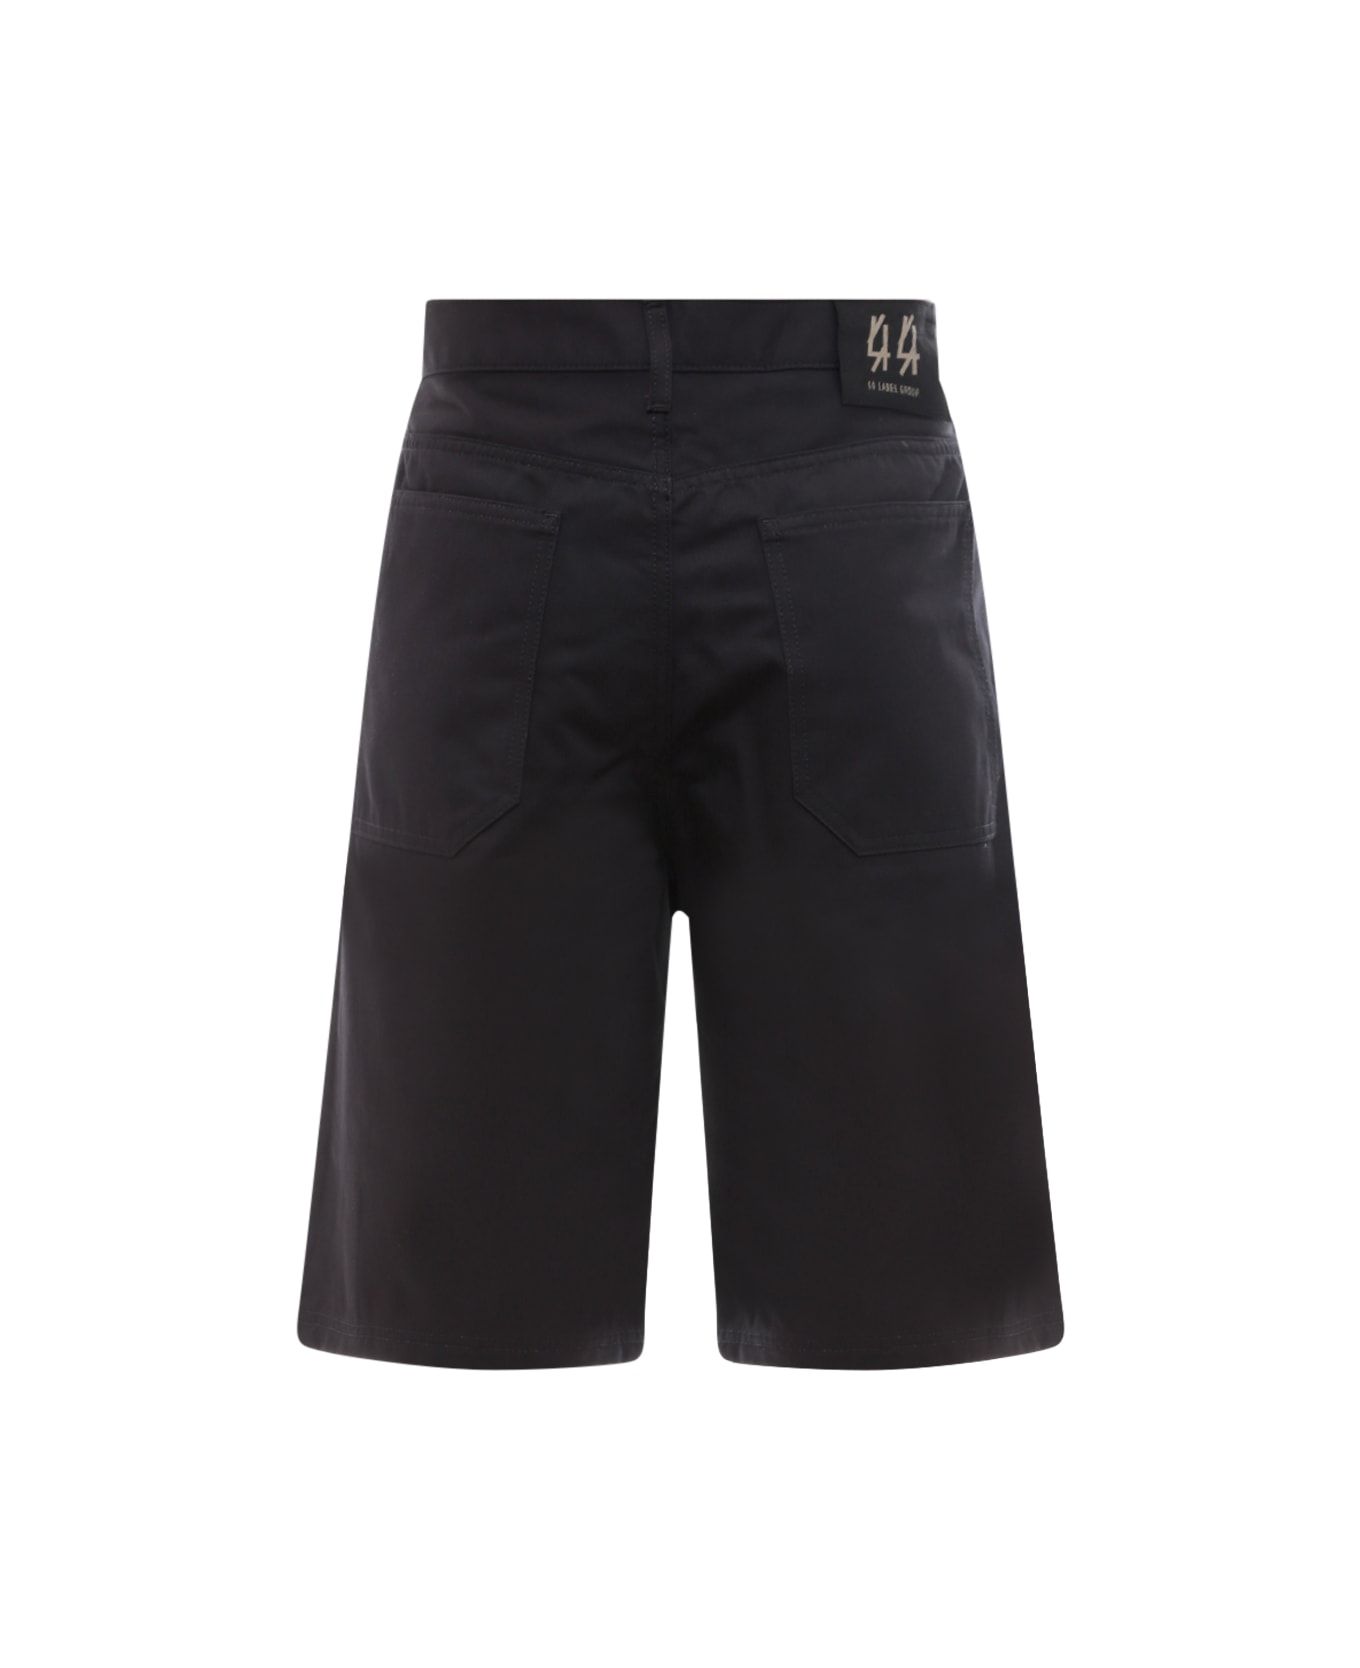 44 Label Group Bermuda Shorts - Black ショートパンツ